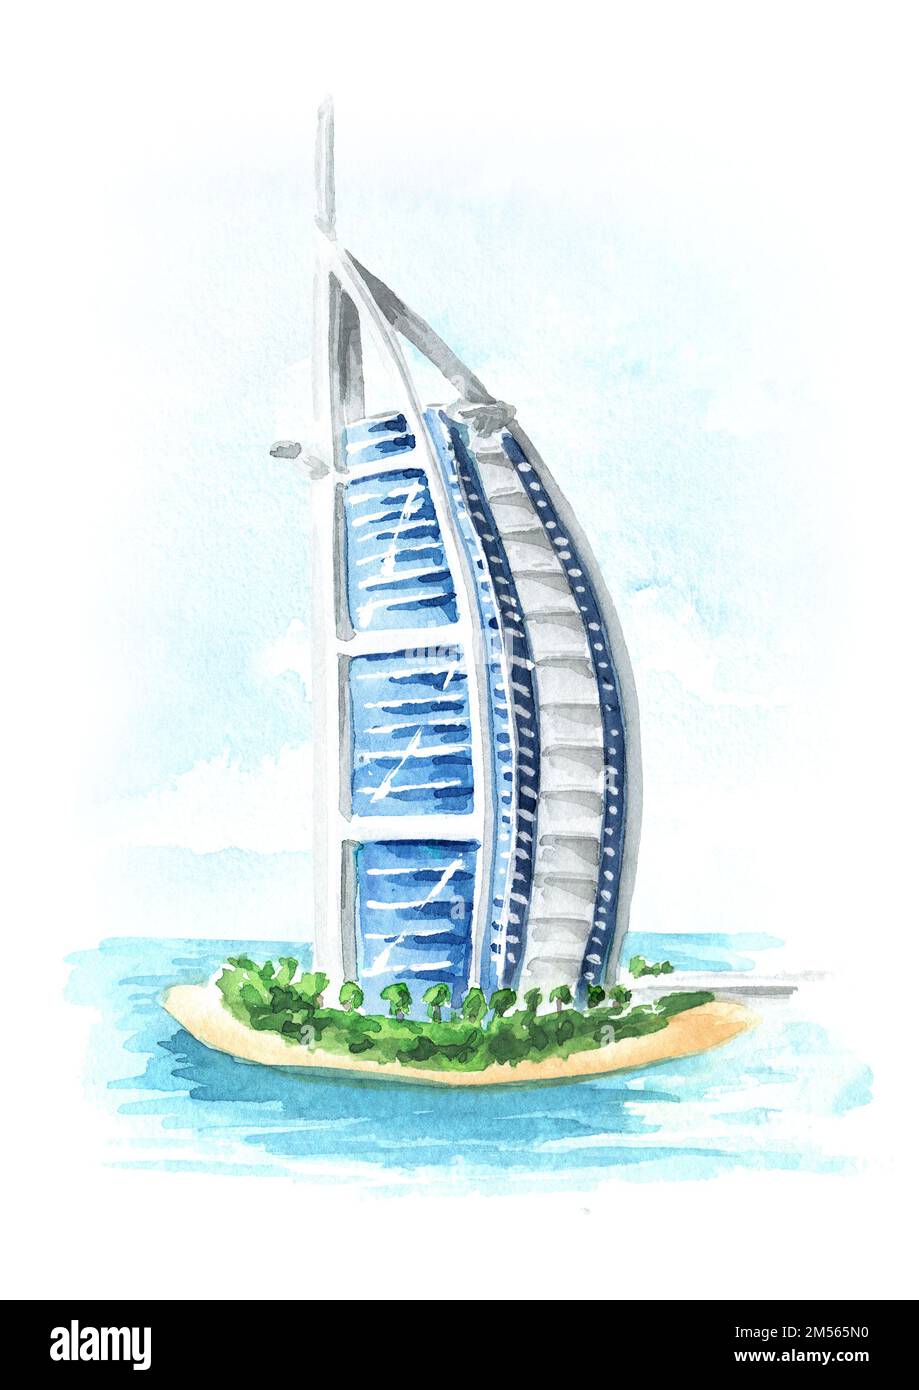 Hotel Burj al arab. Dubai, Emiratos Árabes Unidos. Ilustración de acuarela dibujada a mano aislada sobre fondo blanco Foto de stock